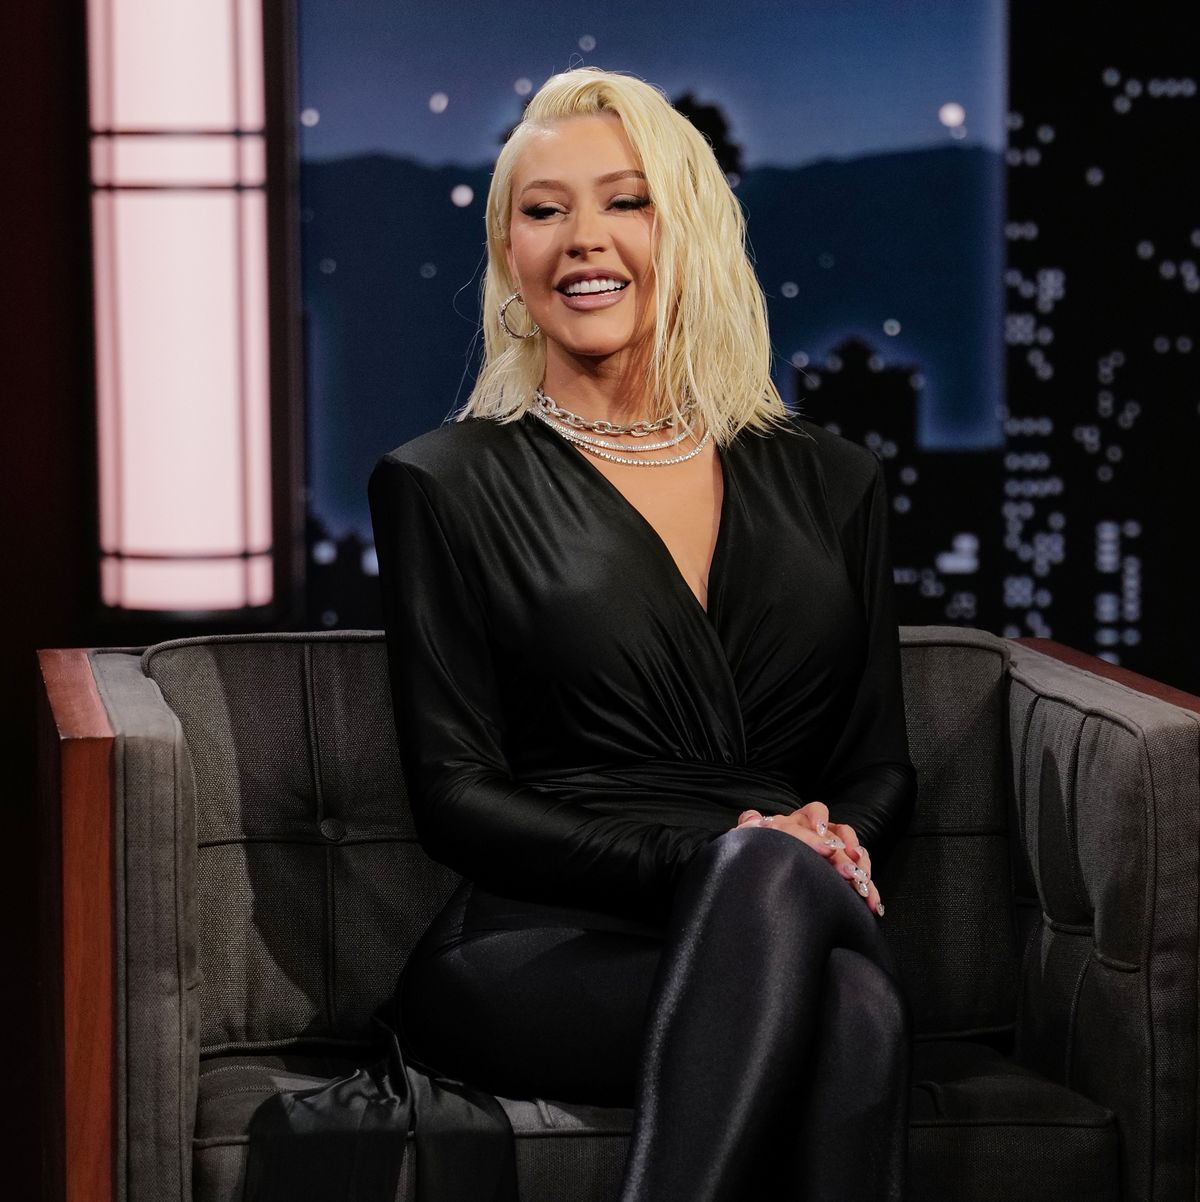 Christina Aguilera Wins Halloween Dressed as 'Burlesque' Co-Star Cher